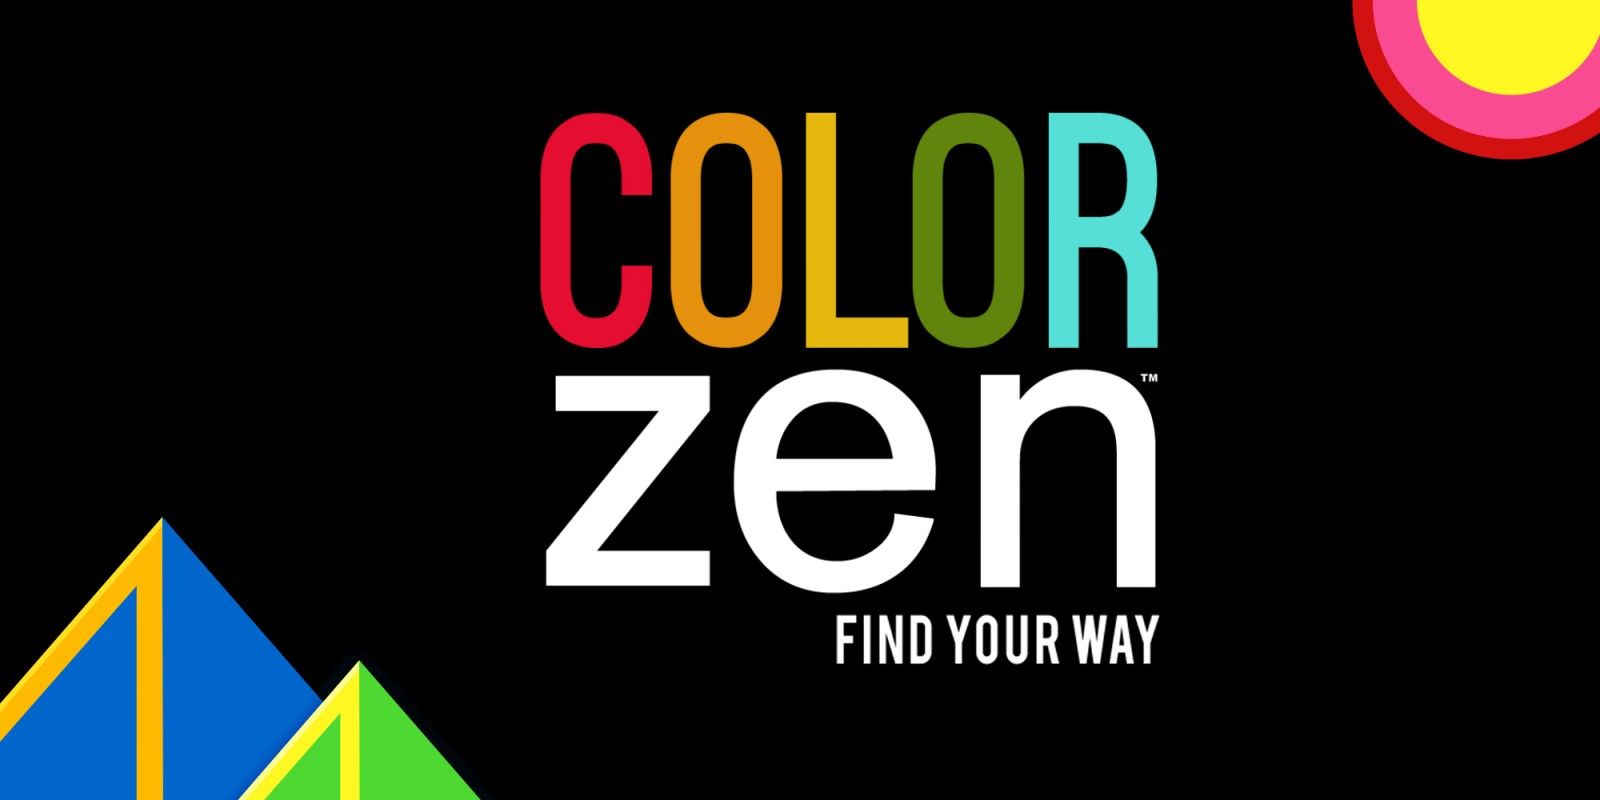 Official Color Zen artwork from promotionals